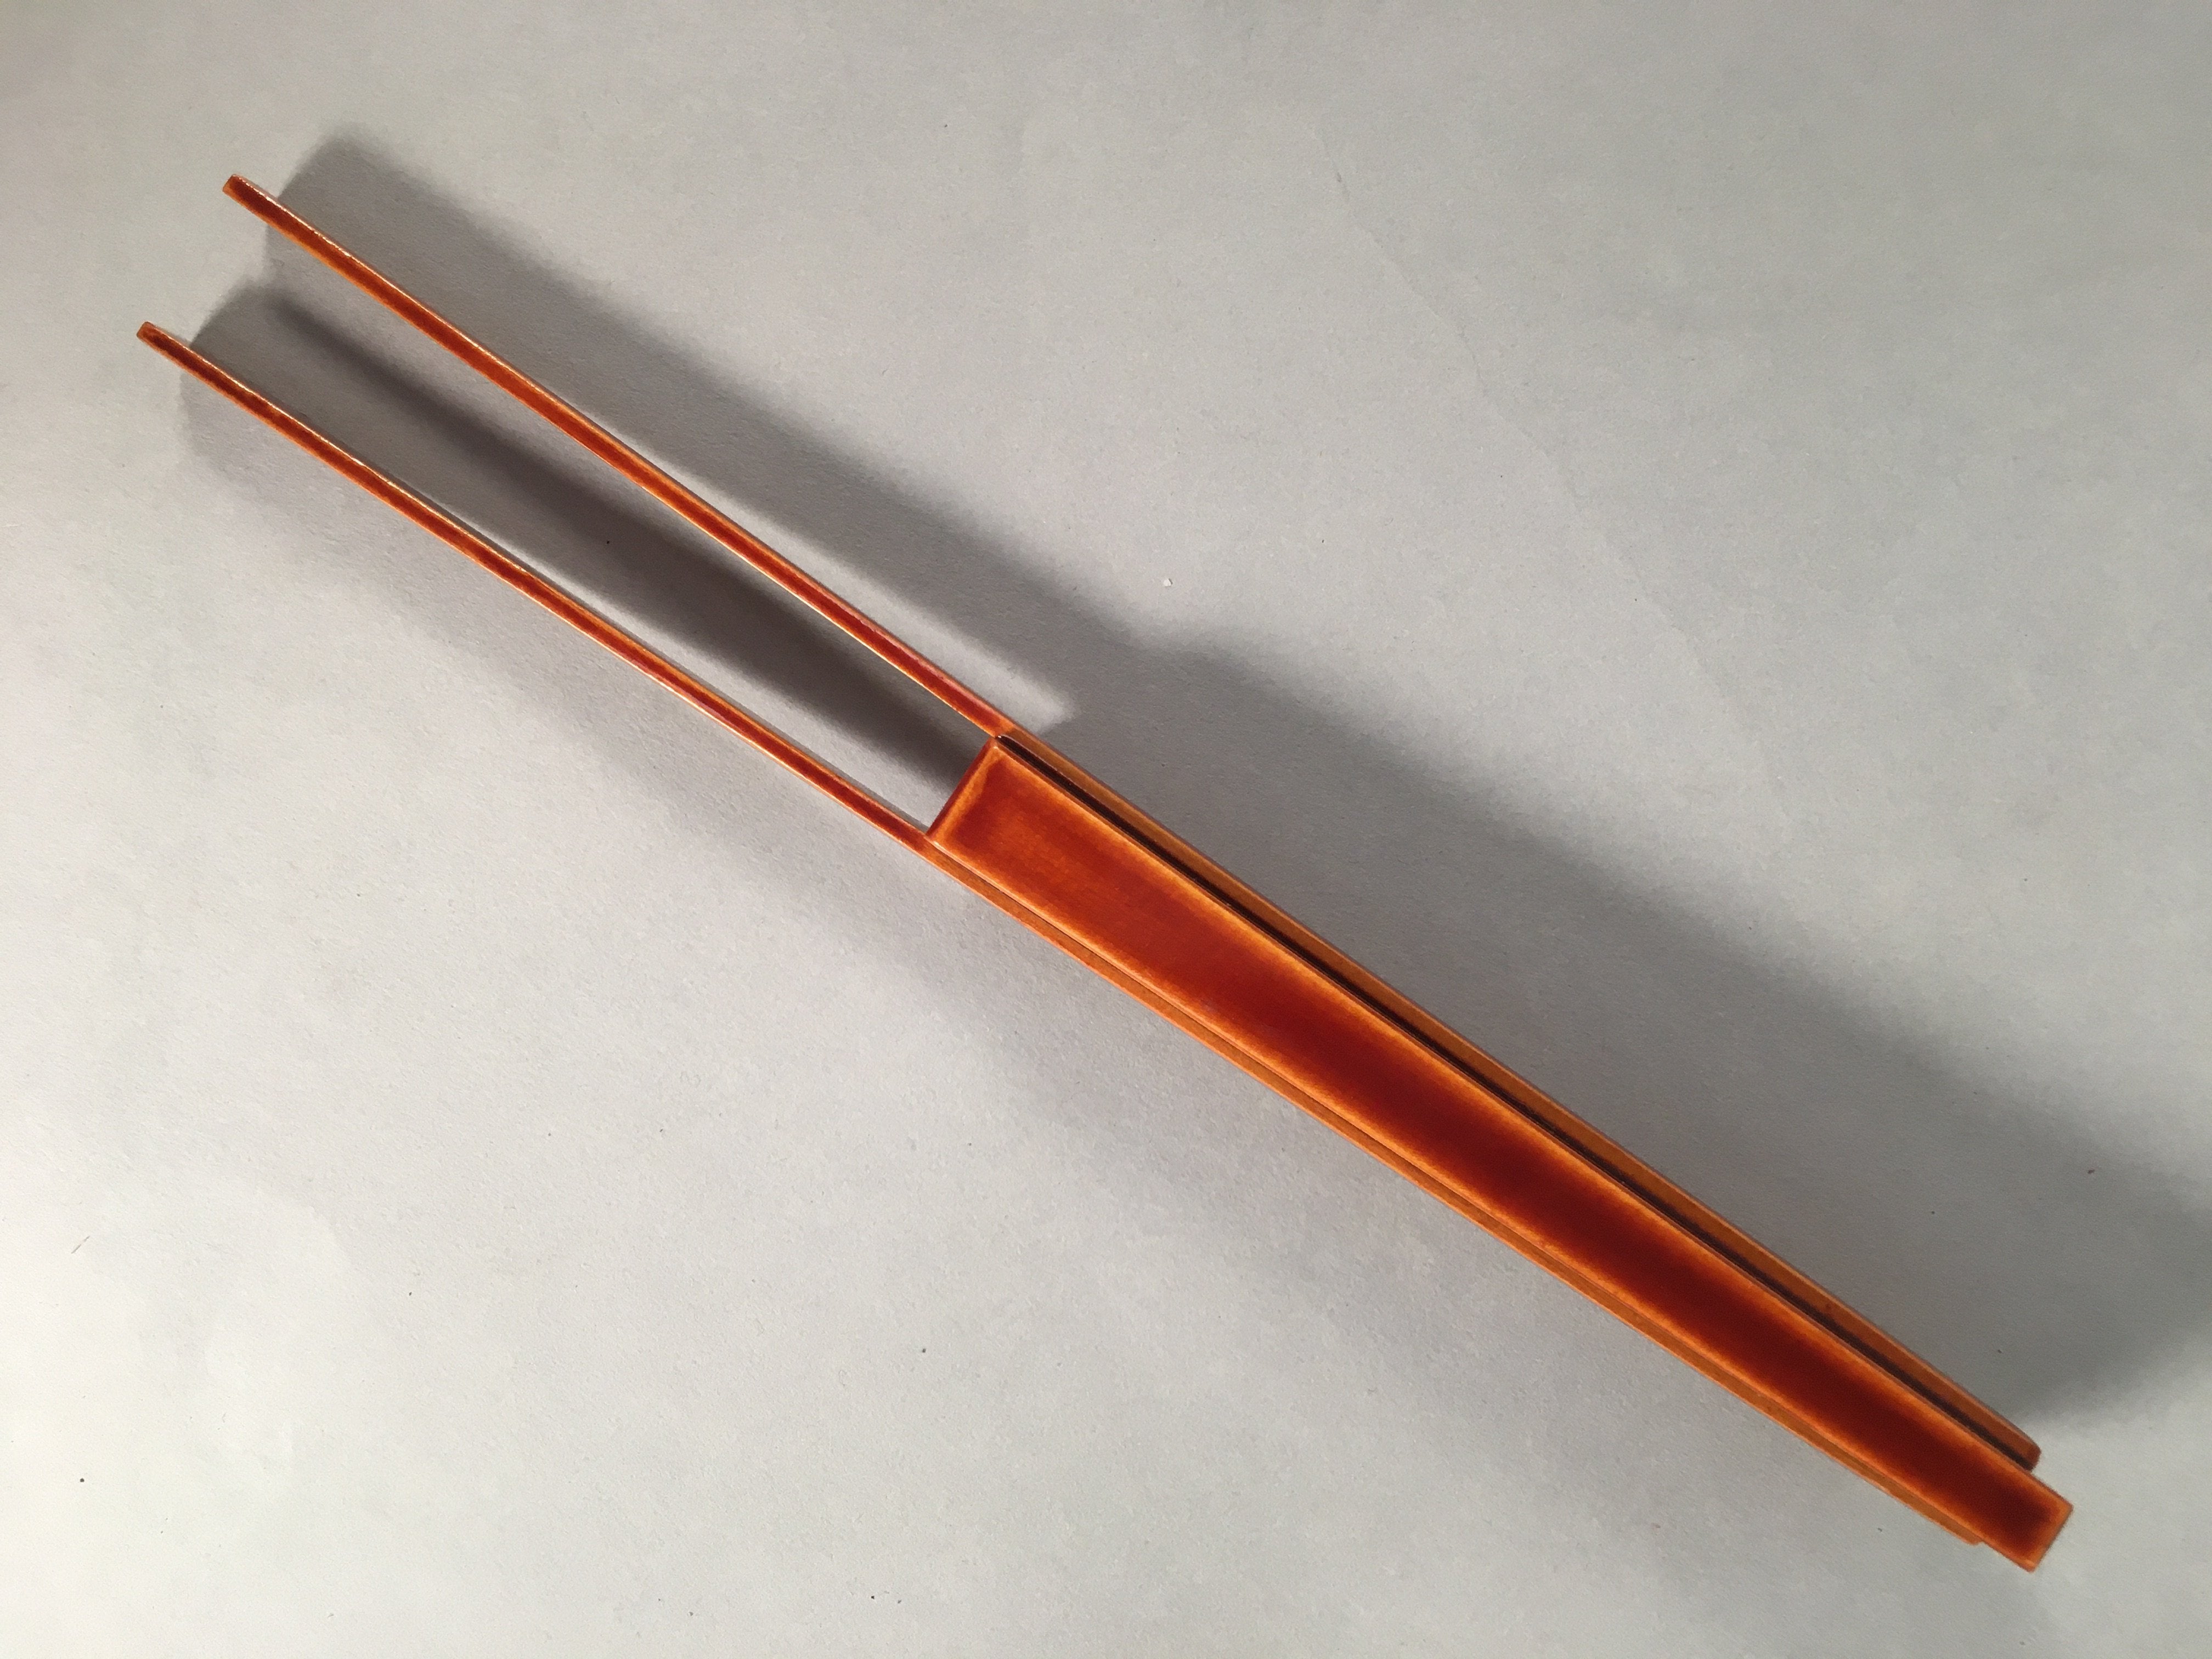 Japanese Wood Lacquer Chopsticks 1 Pair Vtg Hashi Holder Tableware Brown JK114